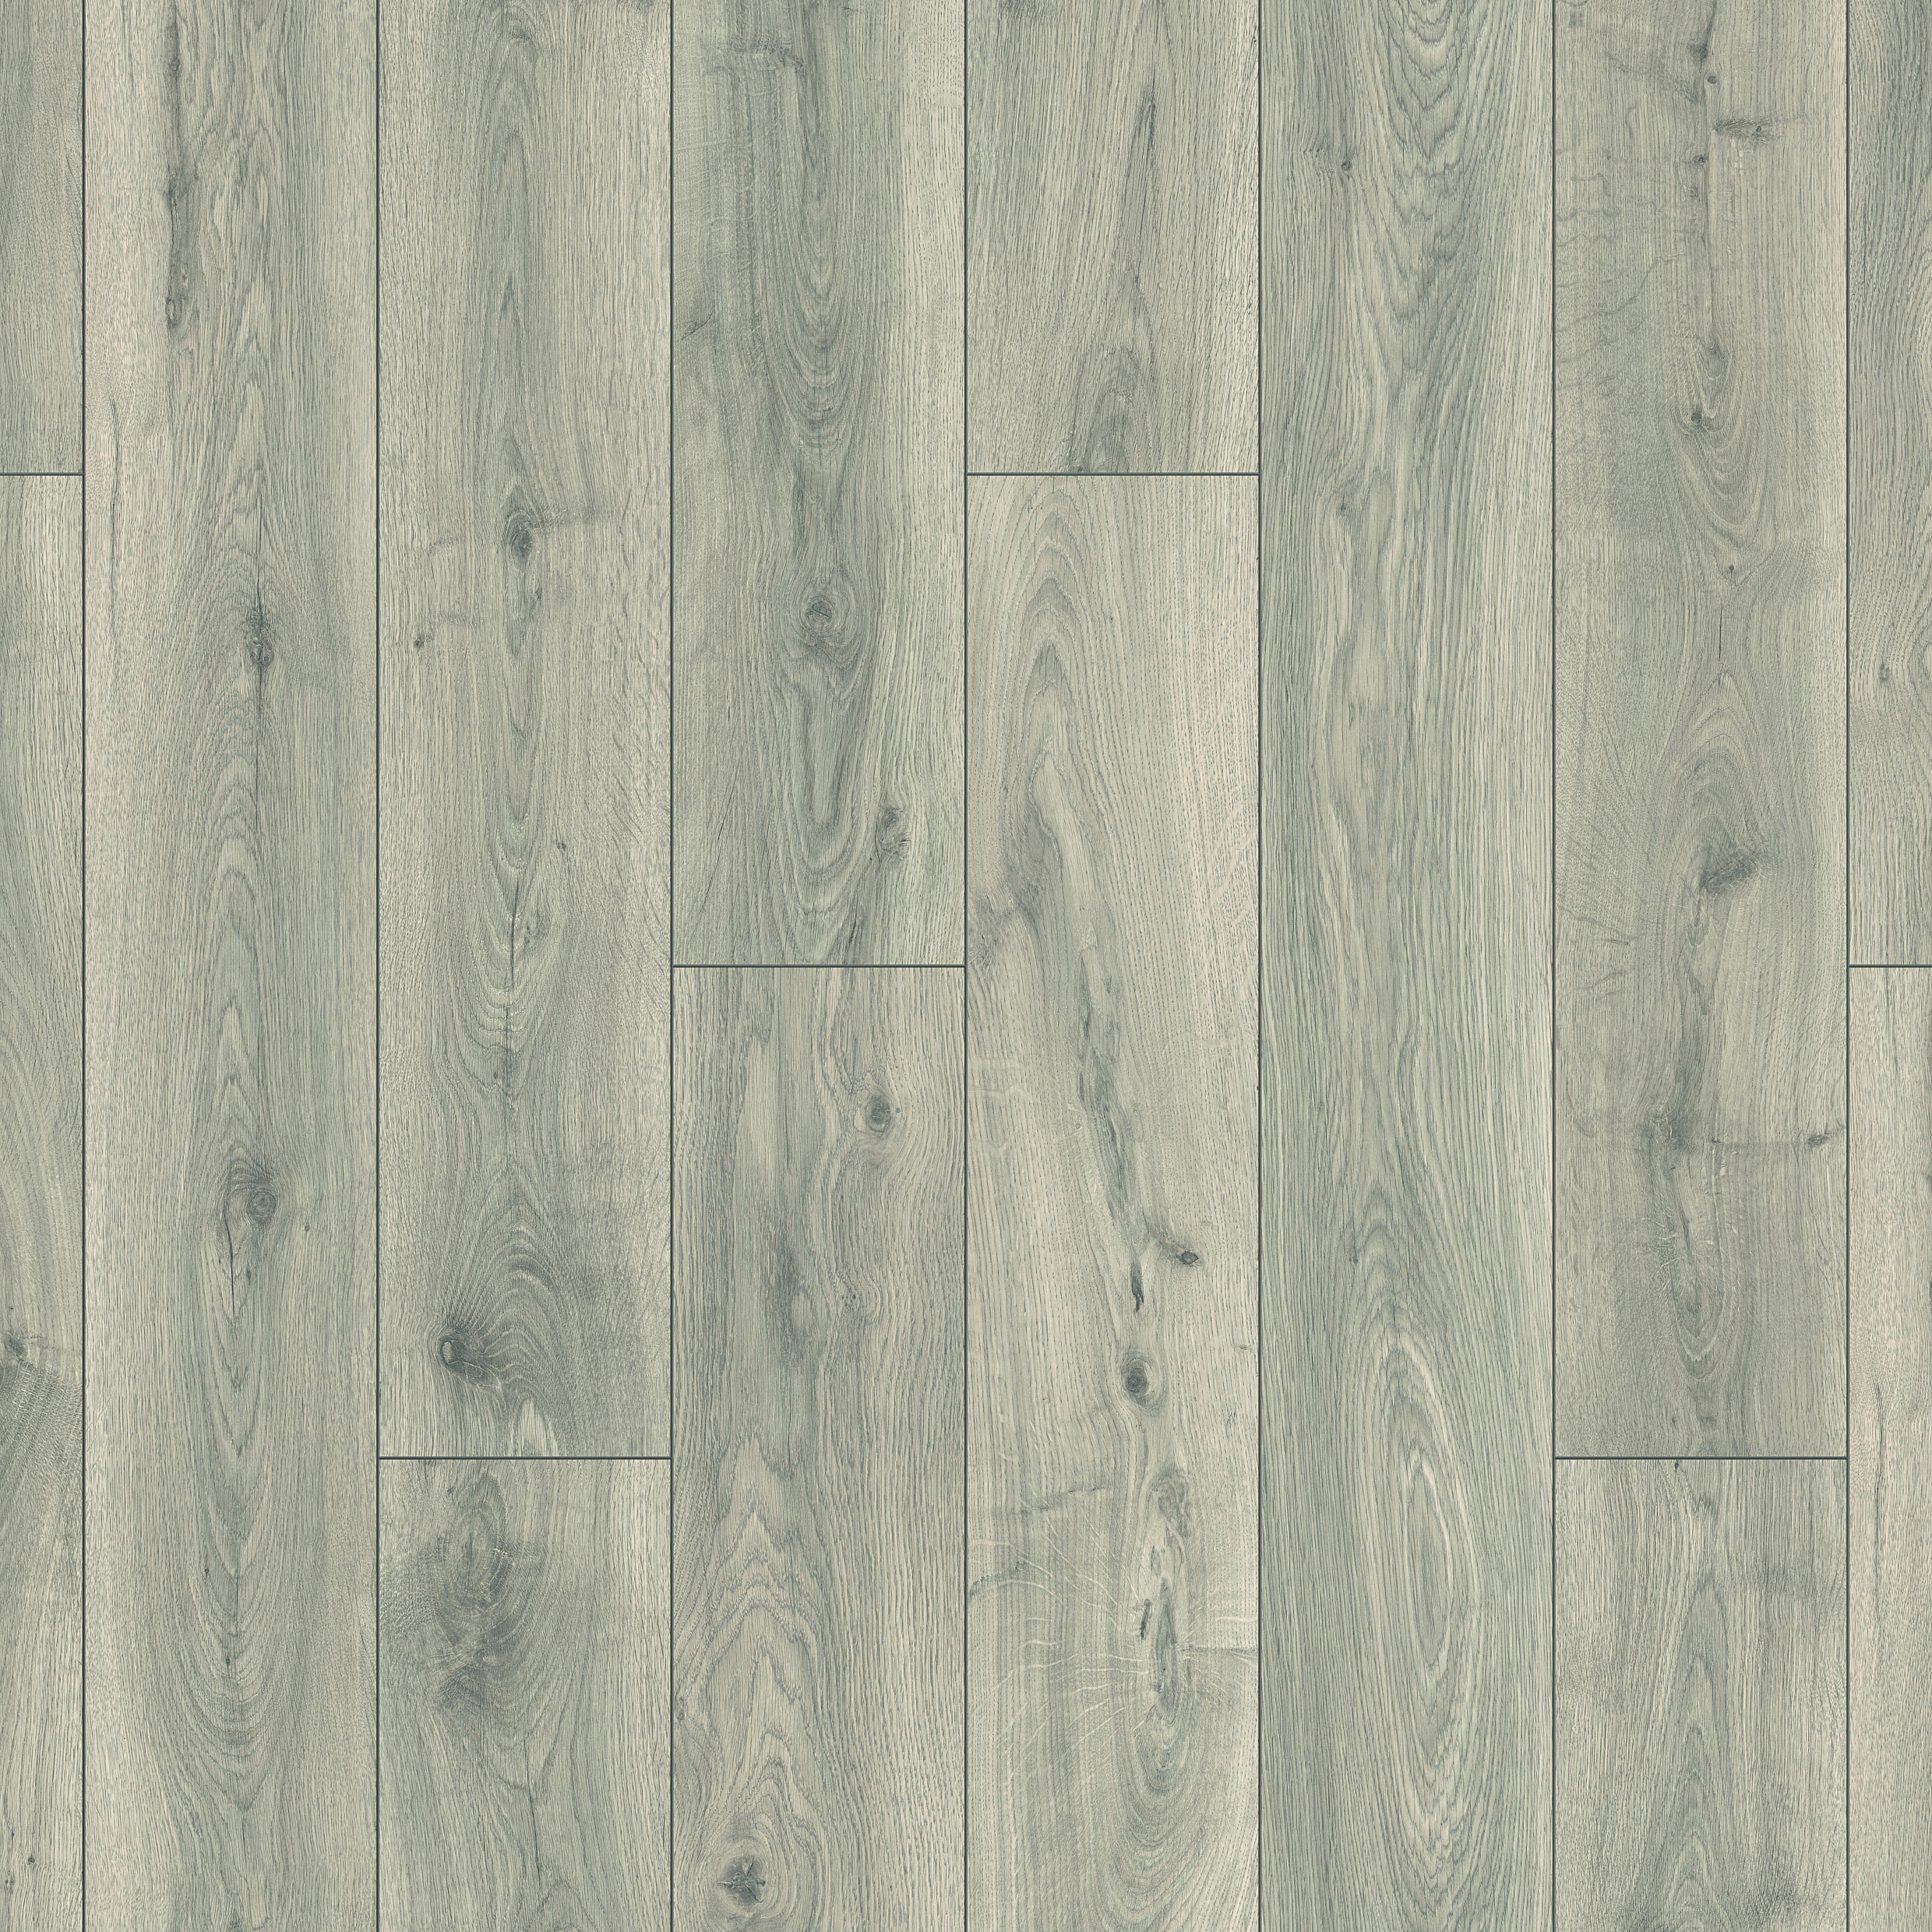 Castleton Grey Oak 10mm Laminate Flooring - 1.73m2